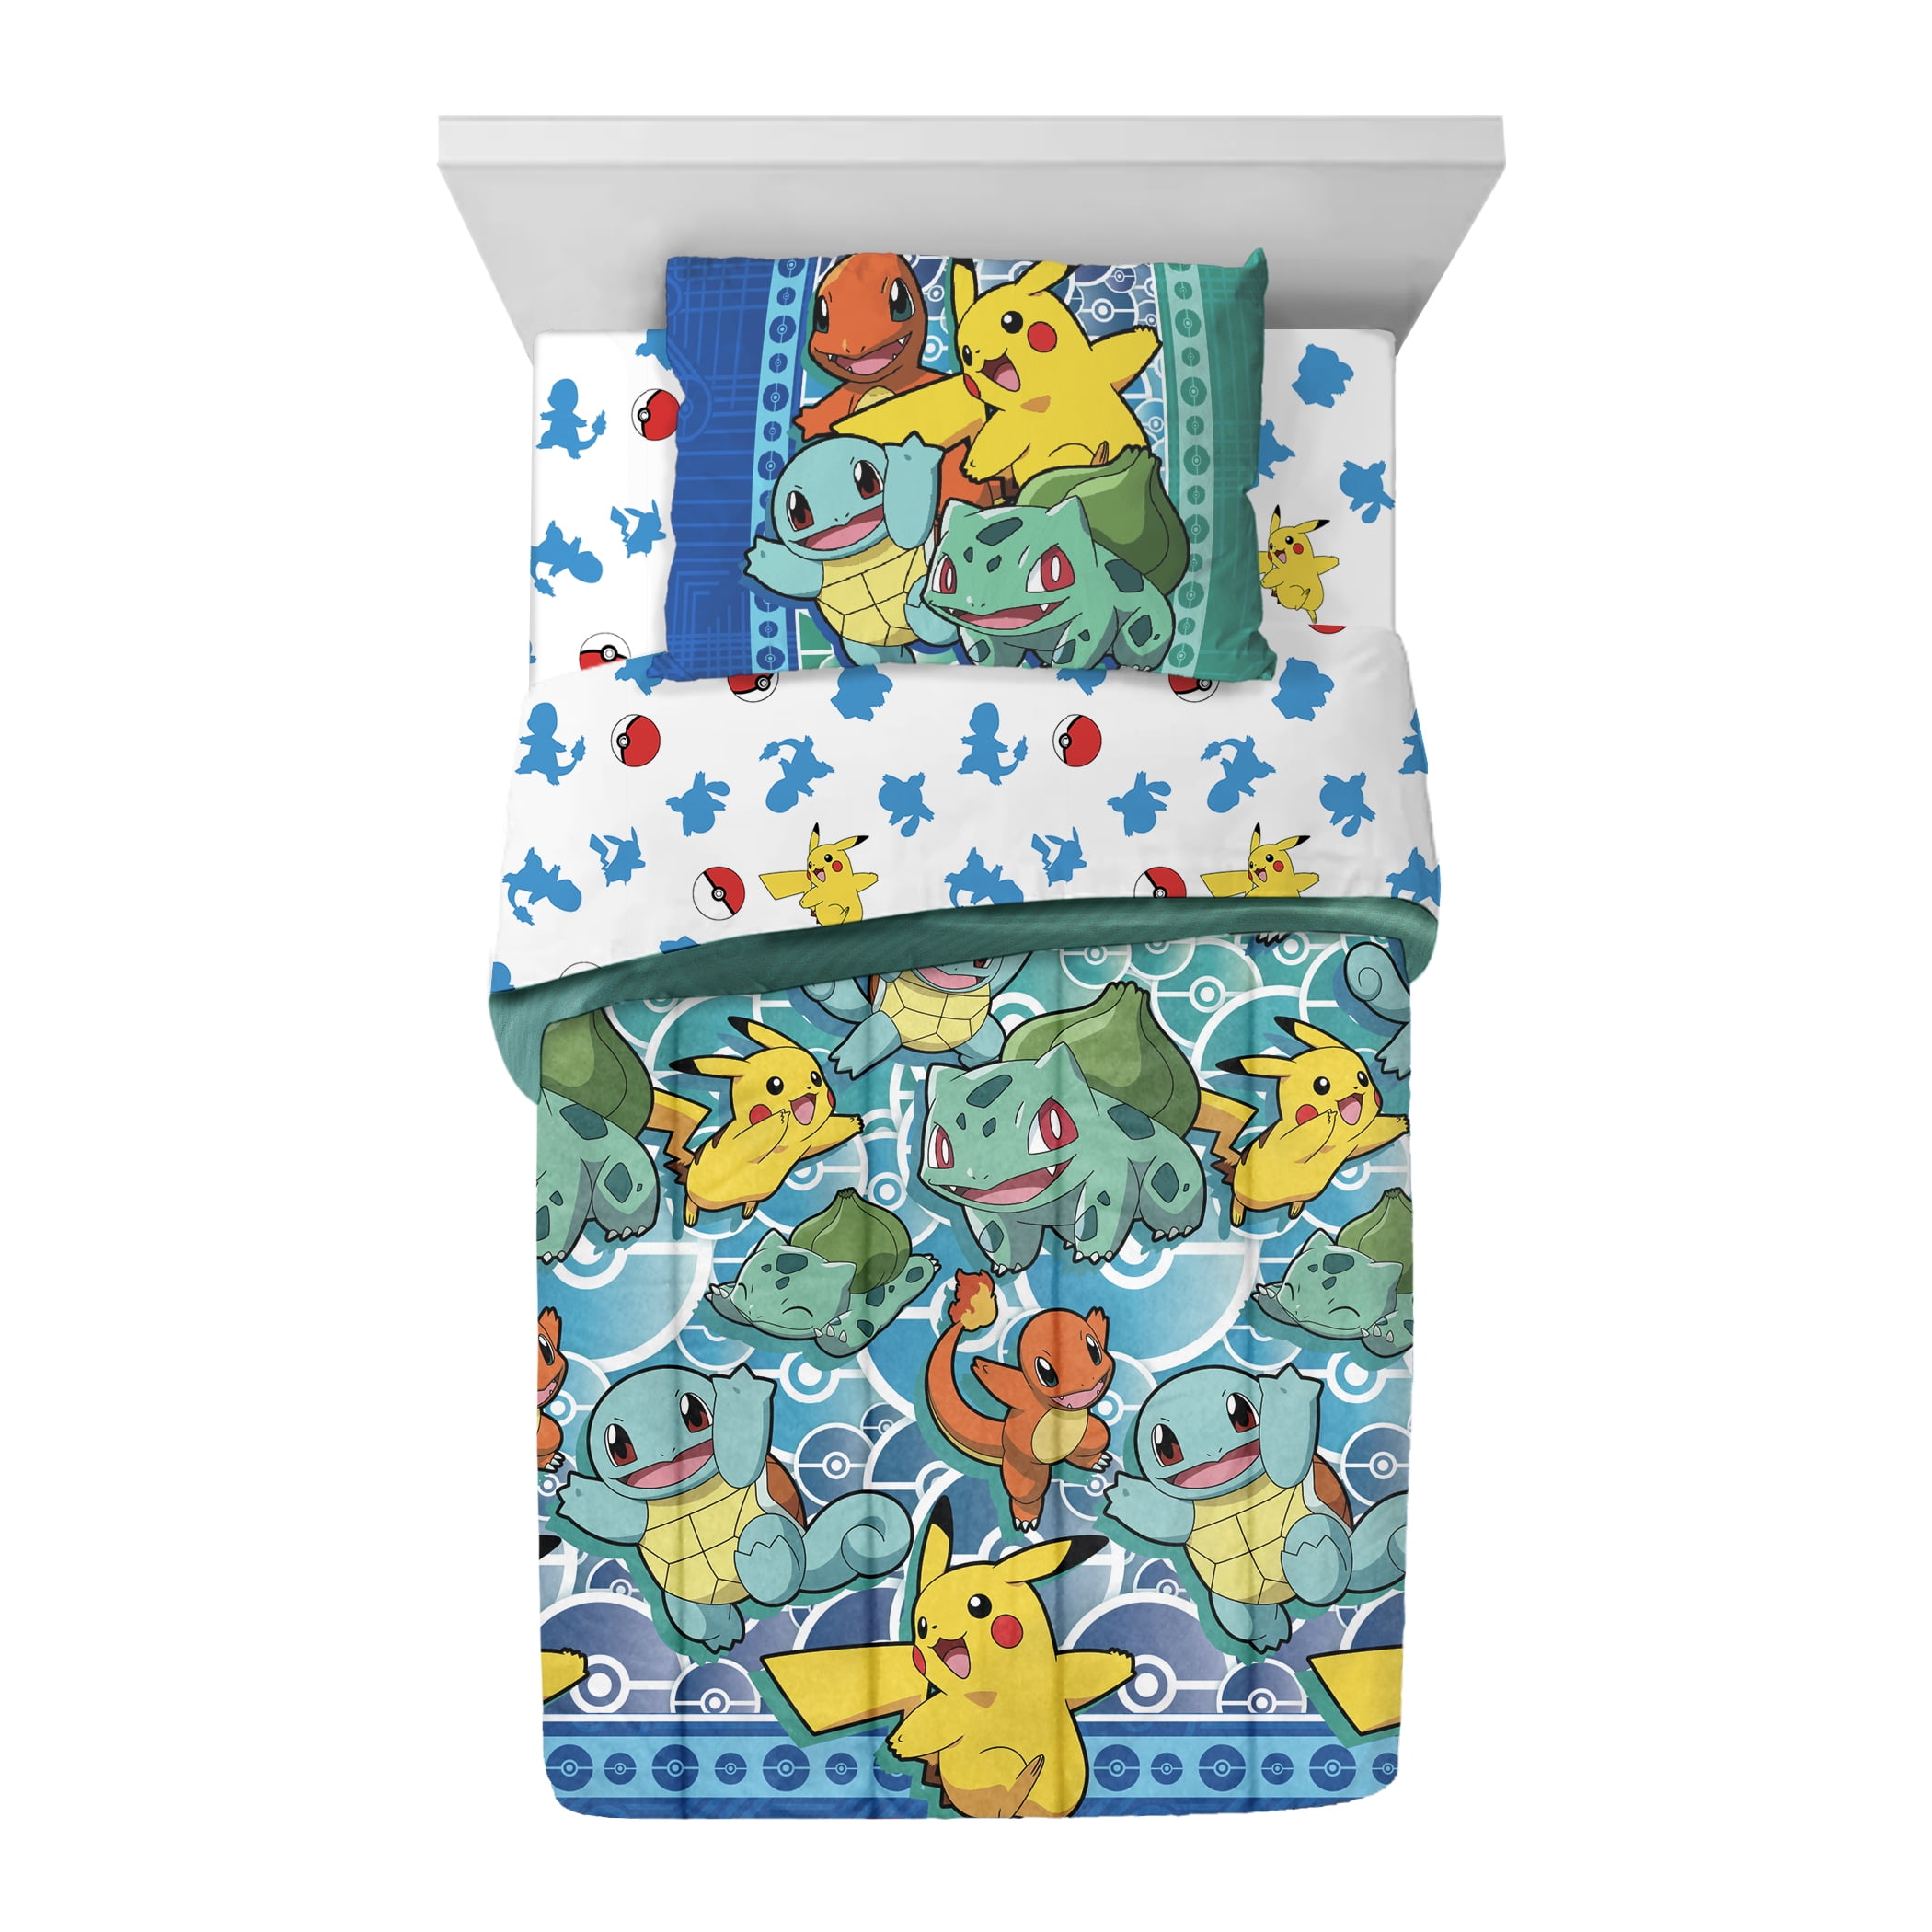 New 4Pc Twin Pokemon Bed in a Bag Kid Comforter Pillowcase Bedding Sheet Set 